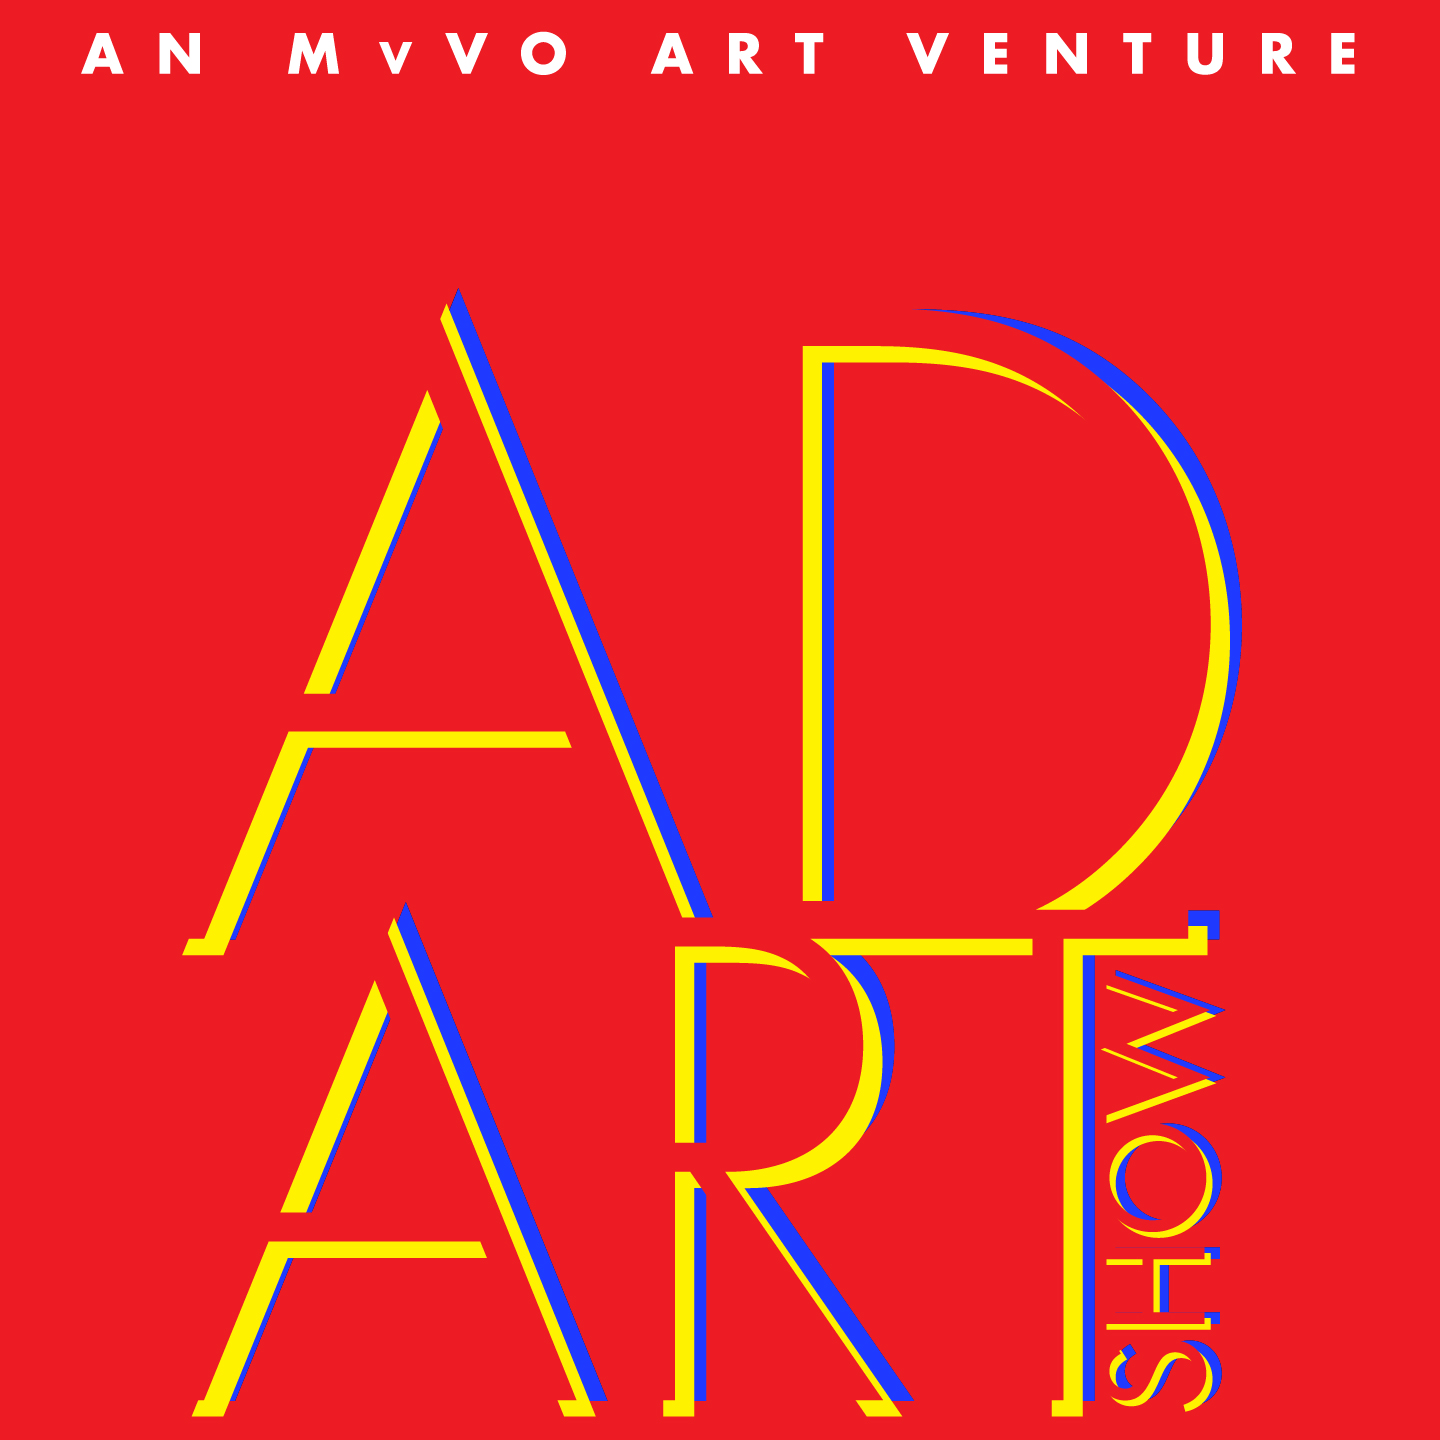 MvVo Art Venture